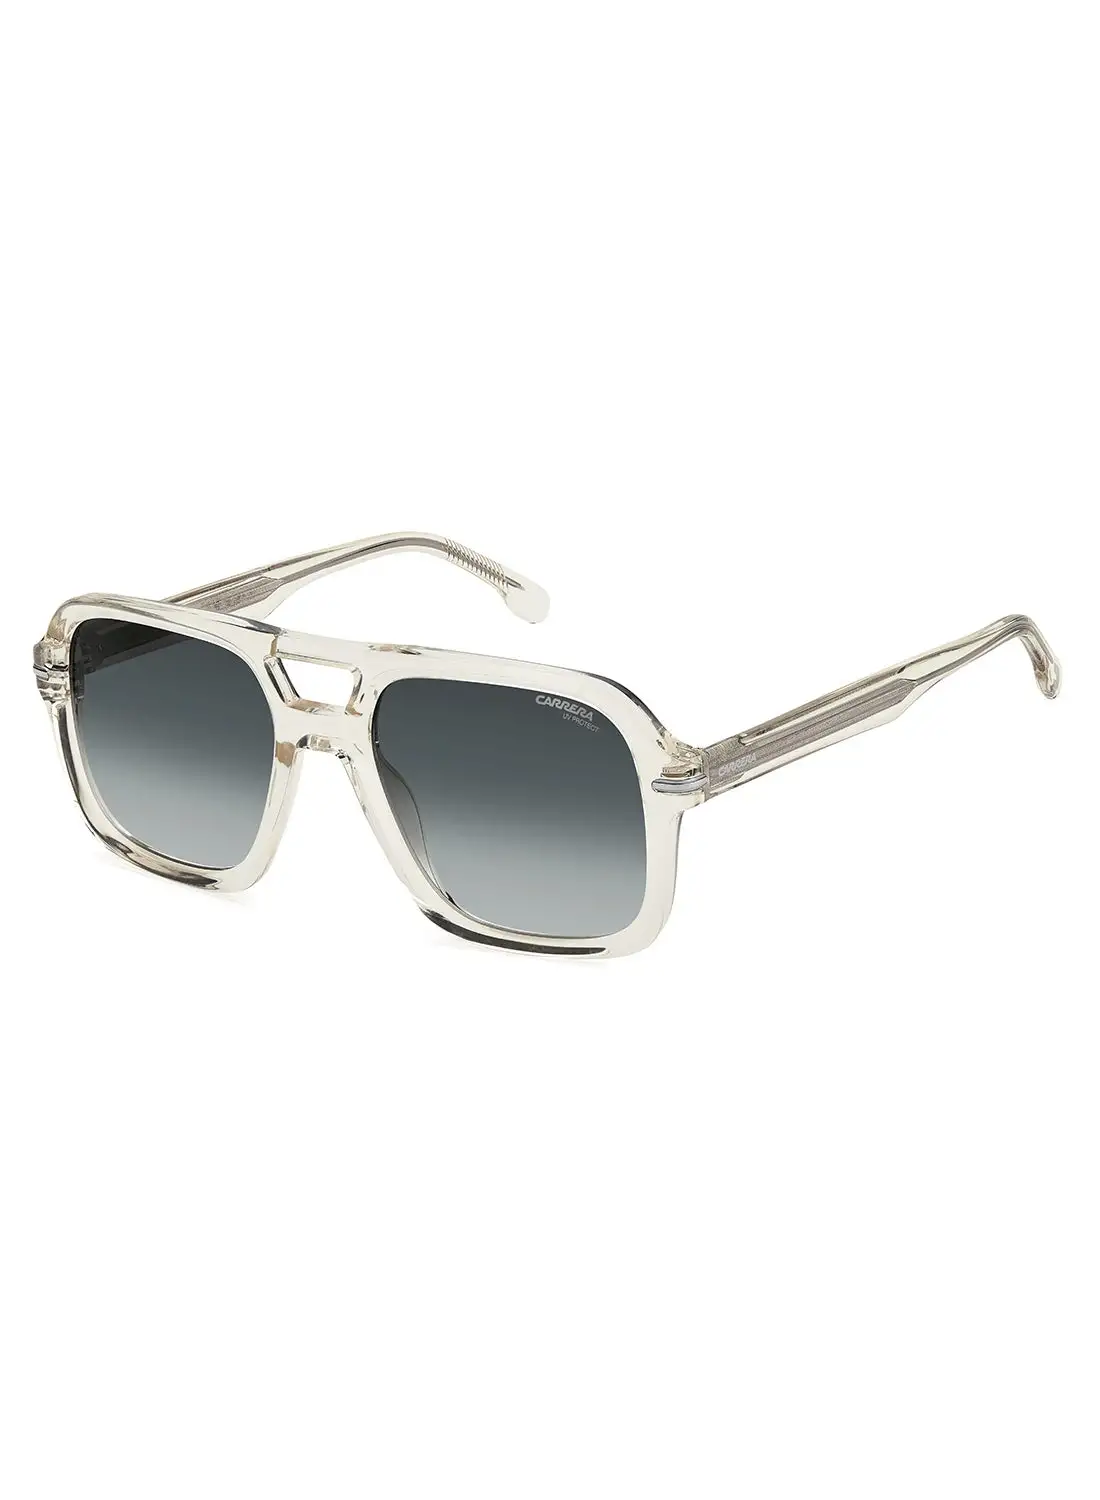 Carrera Men's UV Protection Square Sunglasses - Carrera 317/S Yellow Millimeter - Lens Size: 55 Mm